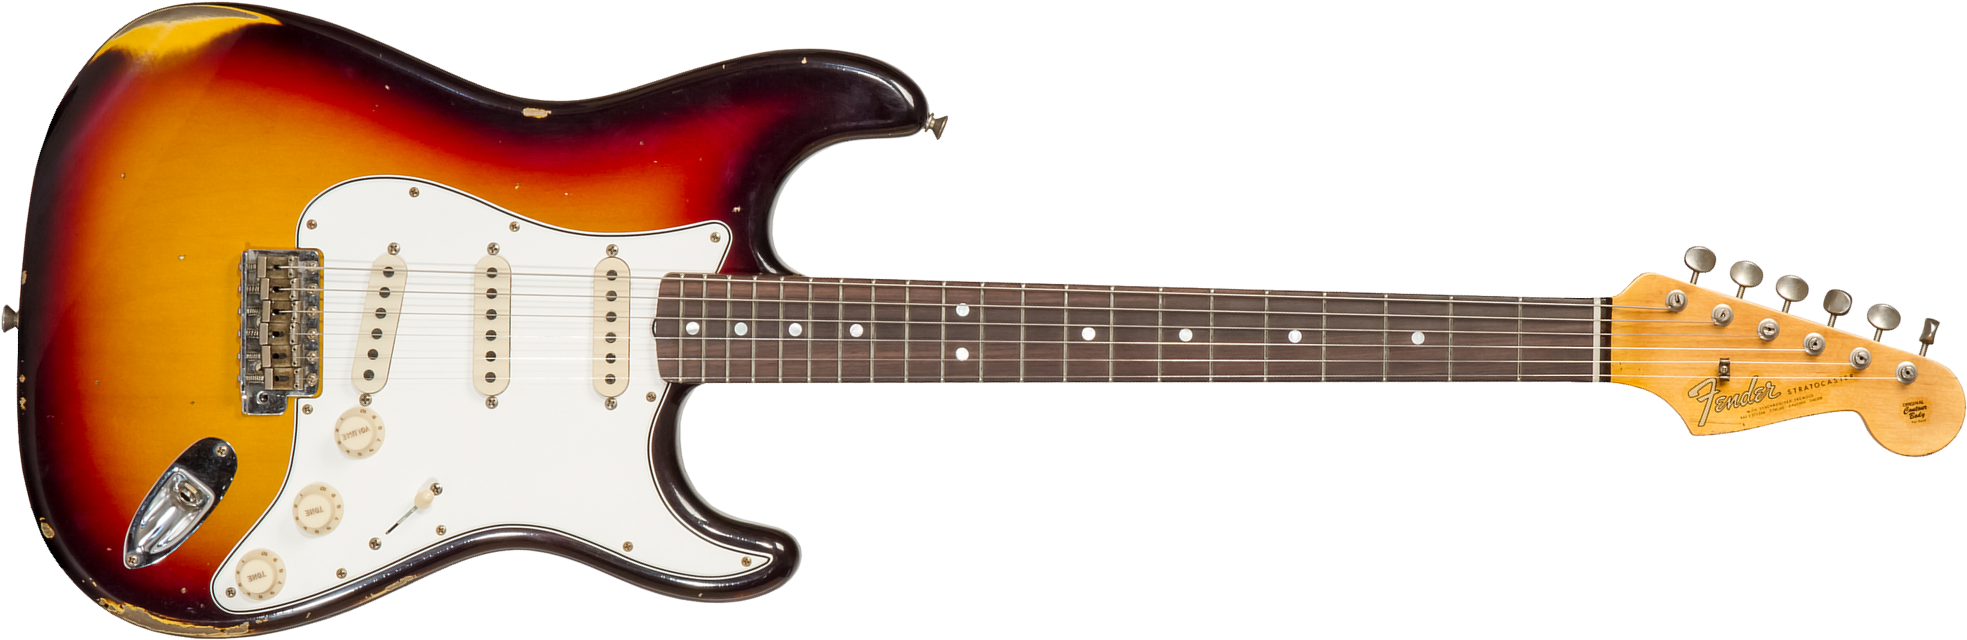 Fender Custom Shop Strat Late 1964 3s Trem Rw #cz569756 - Relic Target 3-color Sunburst - E-Gitarre in Str-Form - Main picture